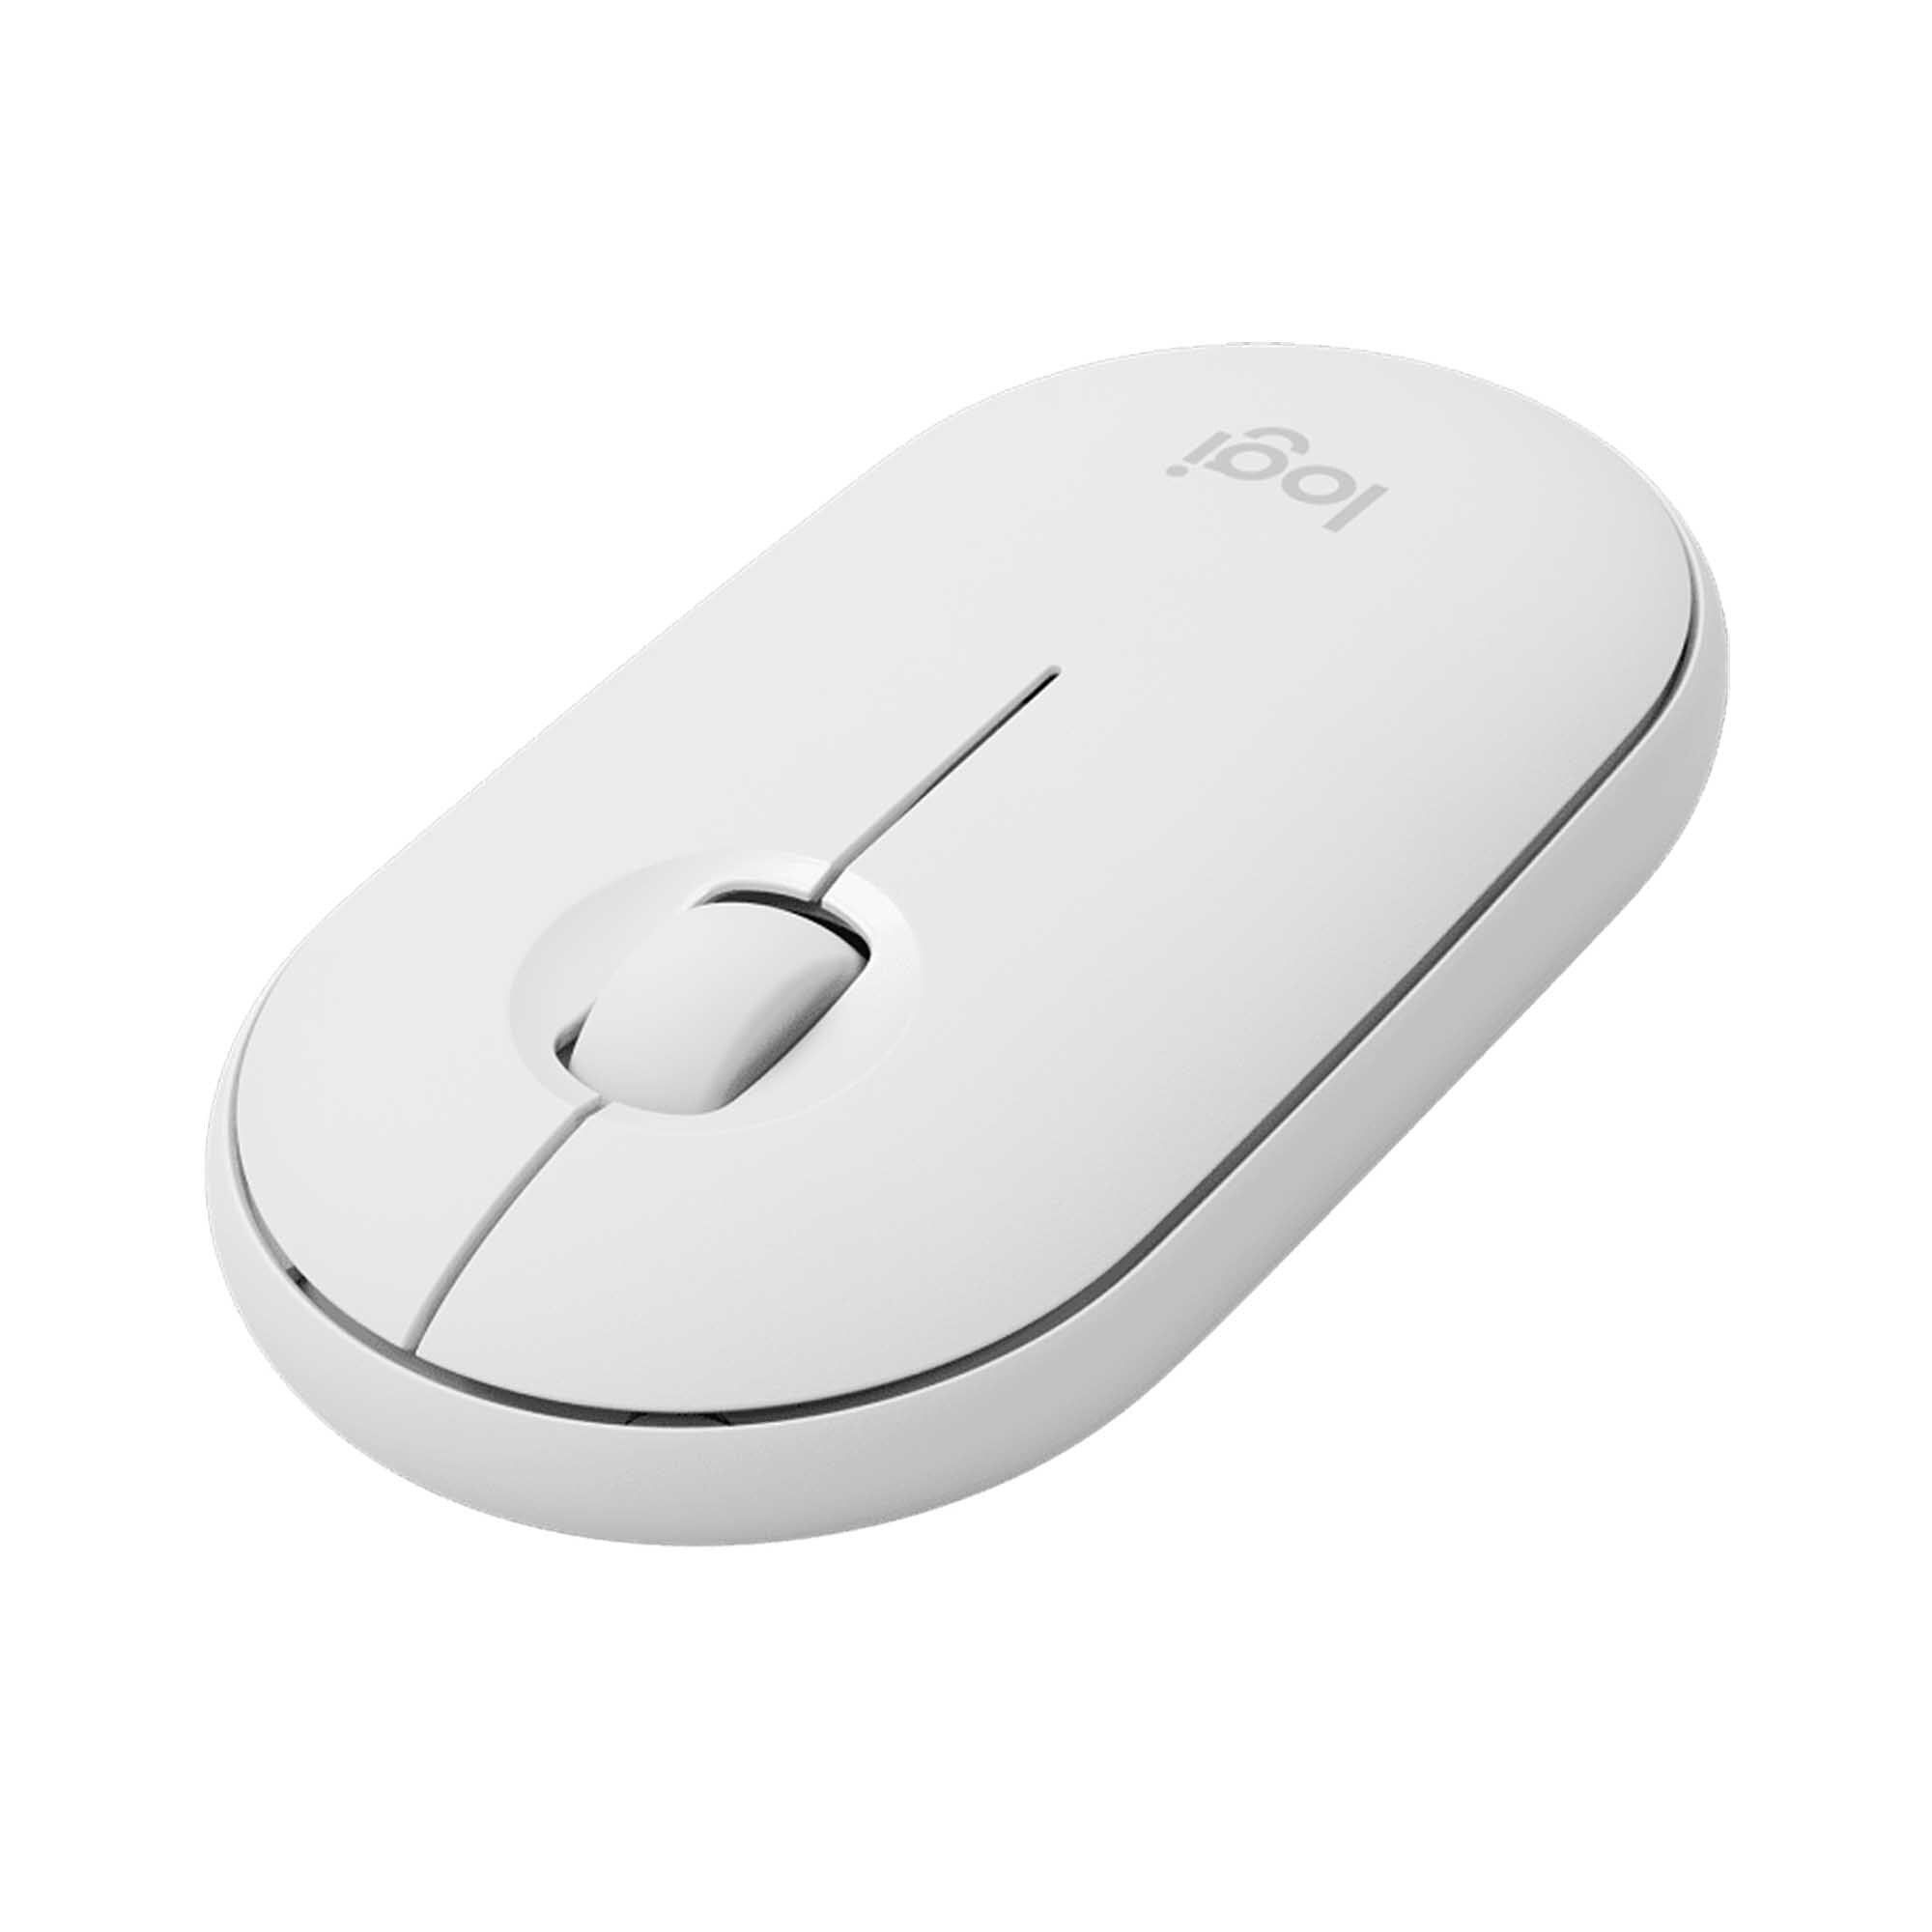 M350 Mouse wireless Pebble White